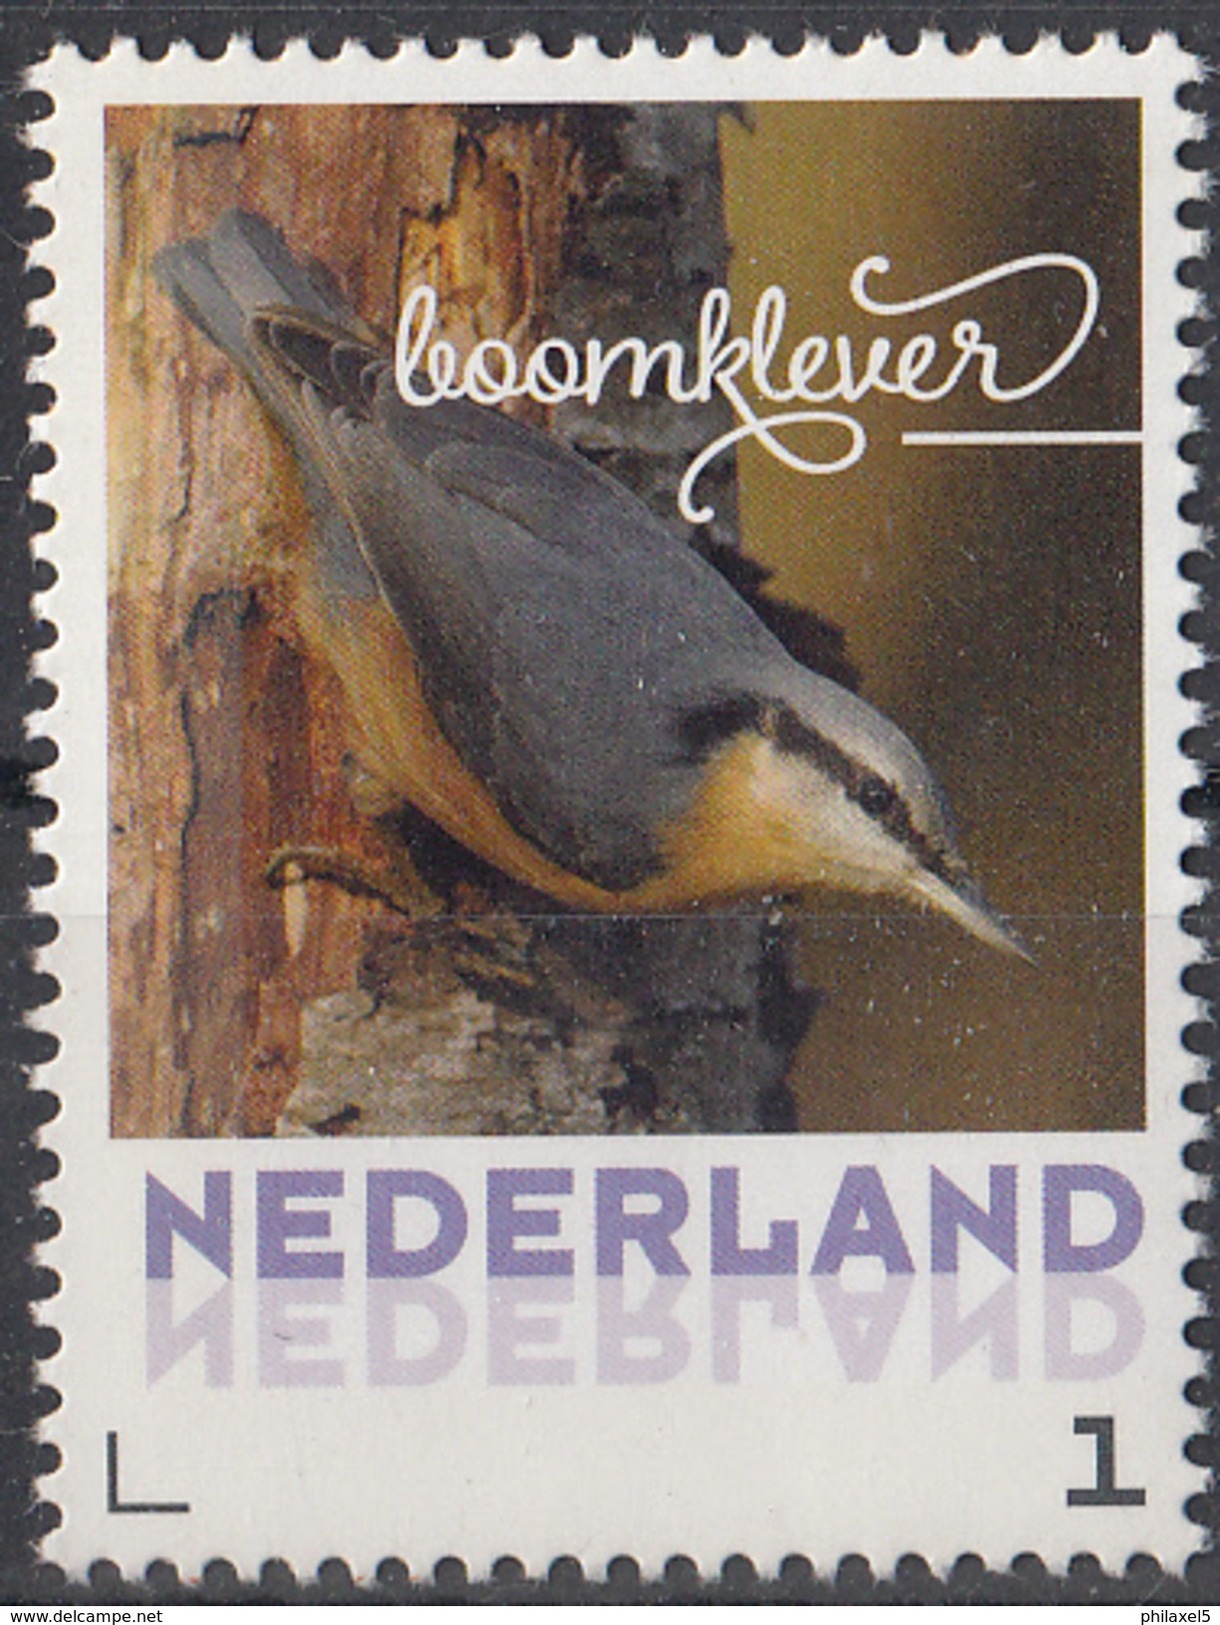 Nederland - September 2017 - Herfstvogels - Boomklever - Vogels/birds/vögel/oiseaux - MNH - Personalisierte Briefmarken